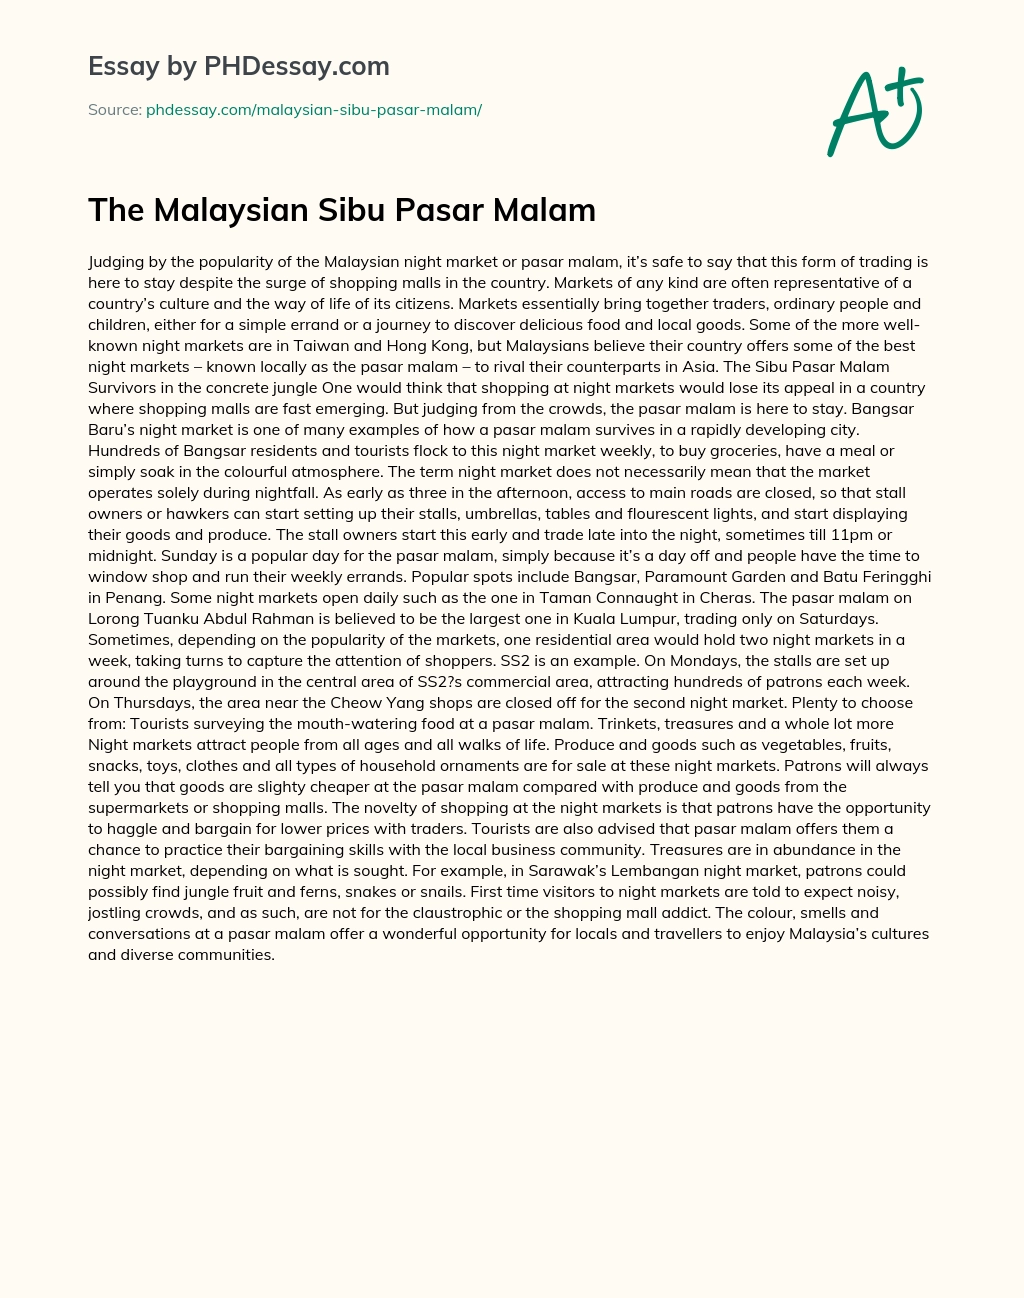 The Malaysian Sibu Pasar Malam essay